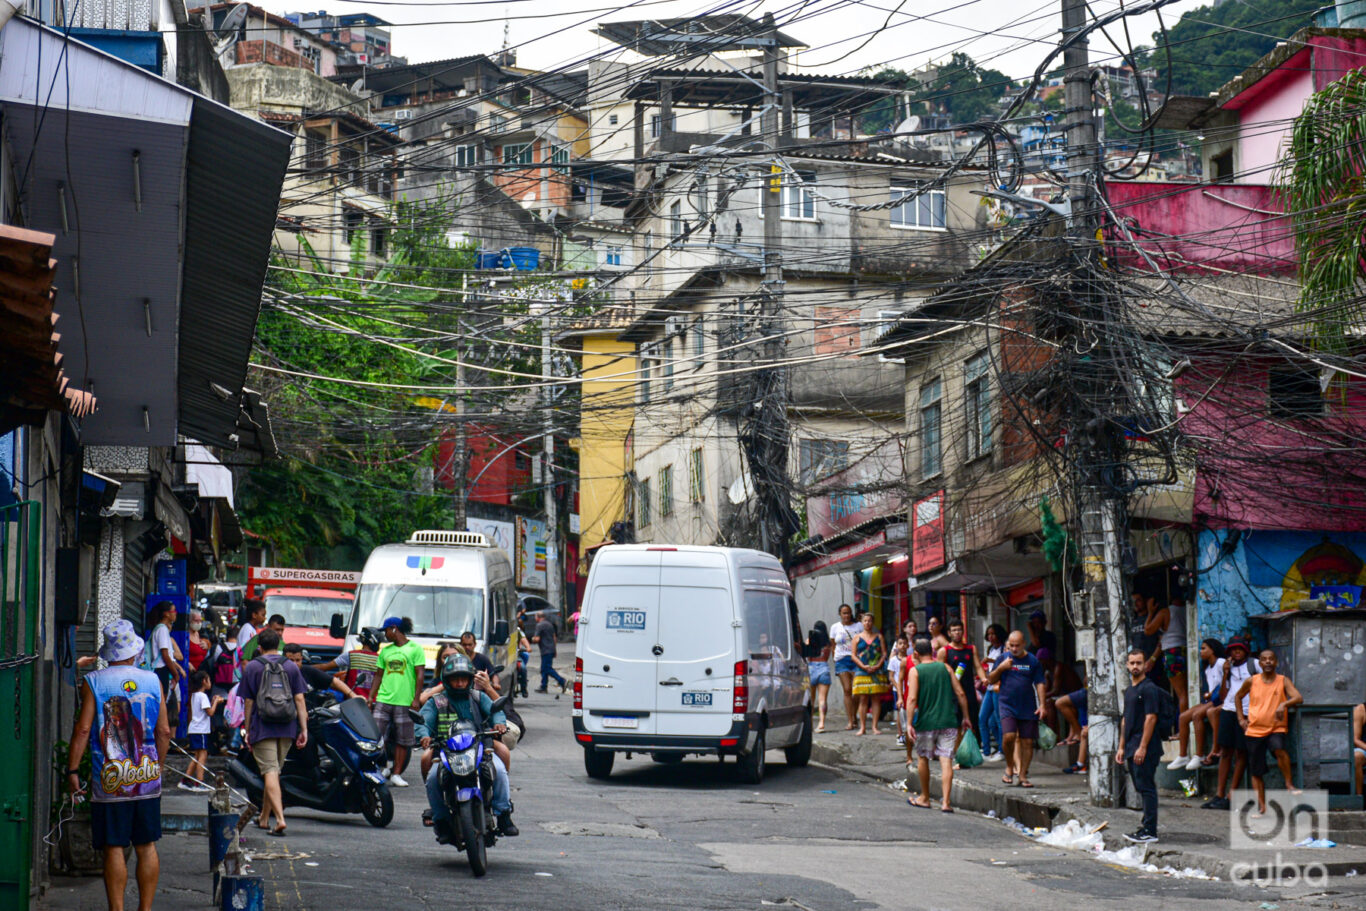  El ajetreo por las calles Rocinha. Foto: Kaloian.
